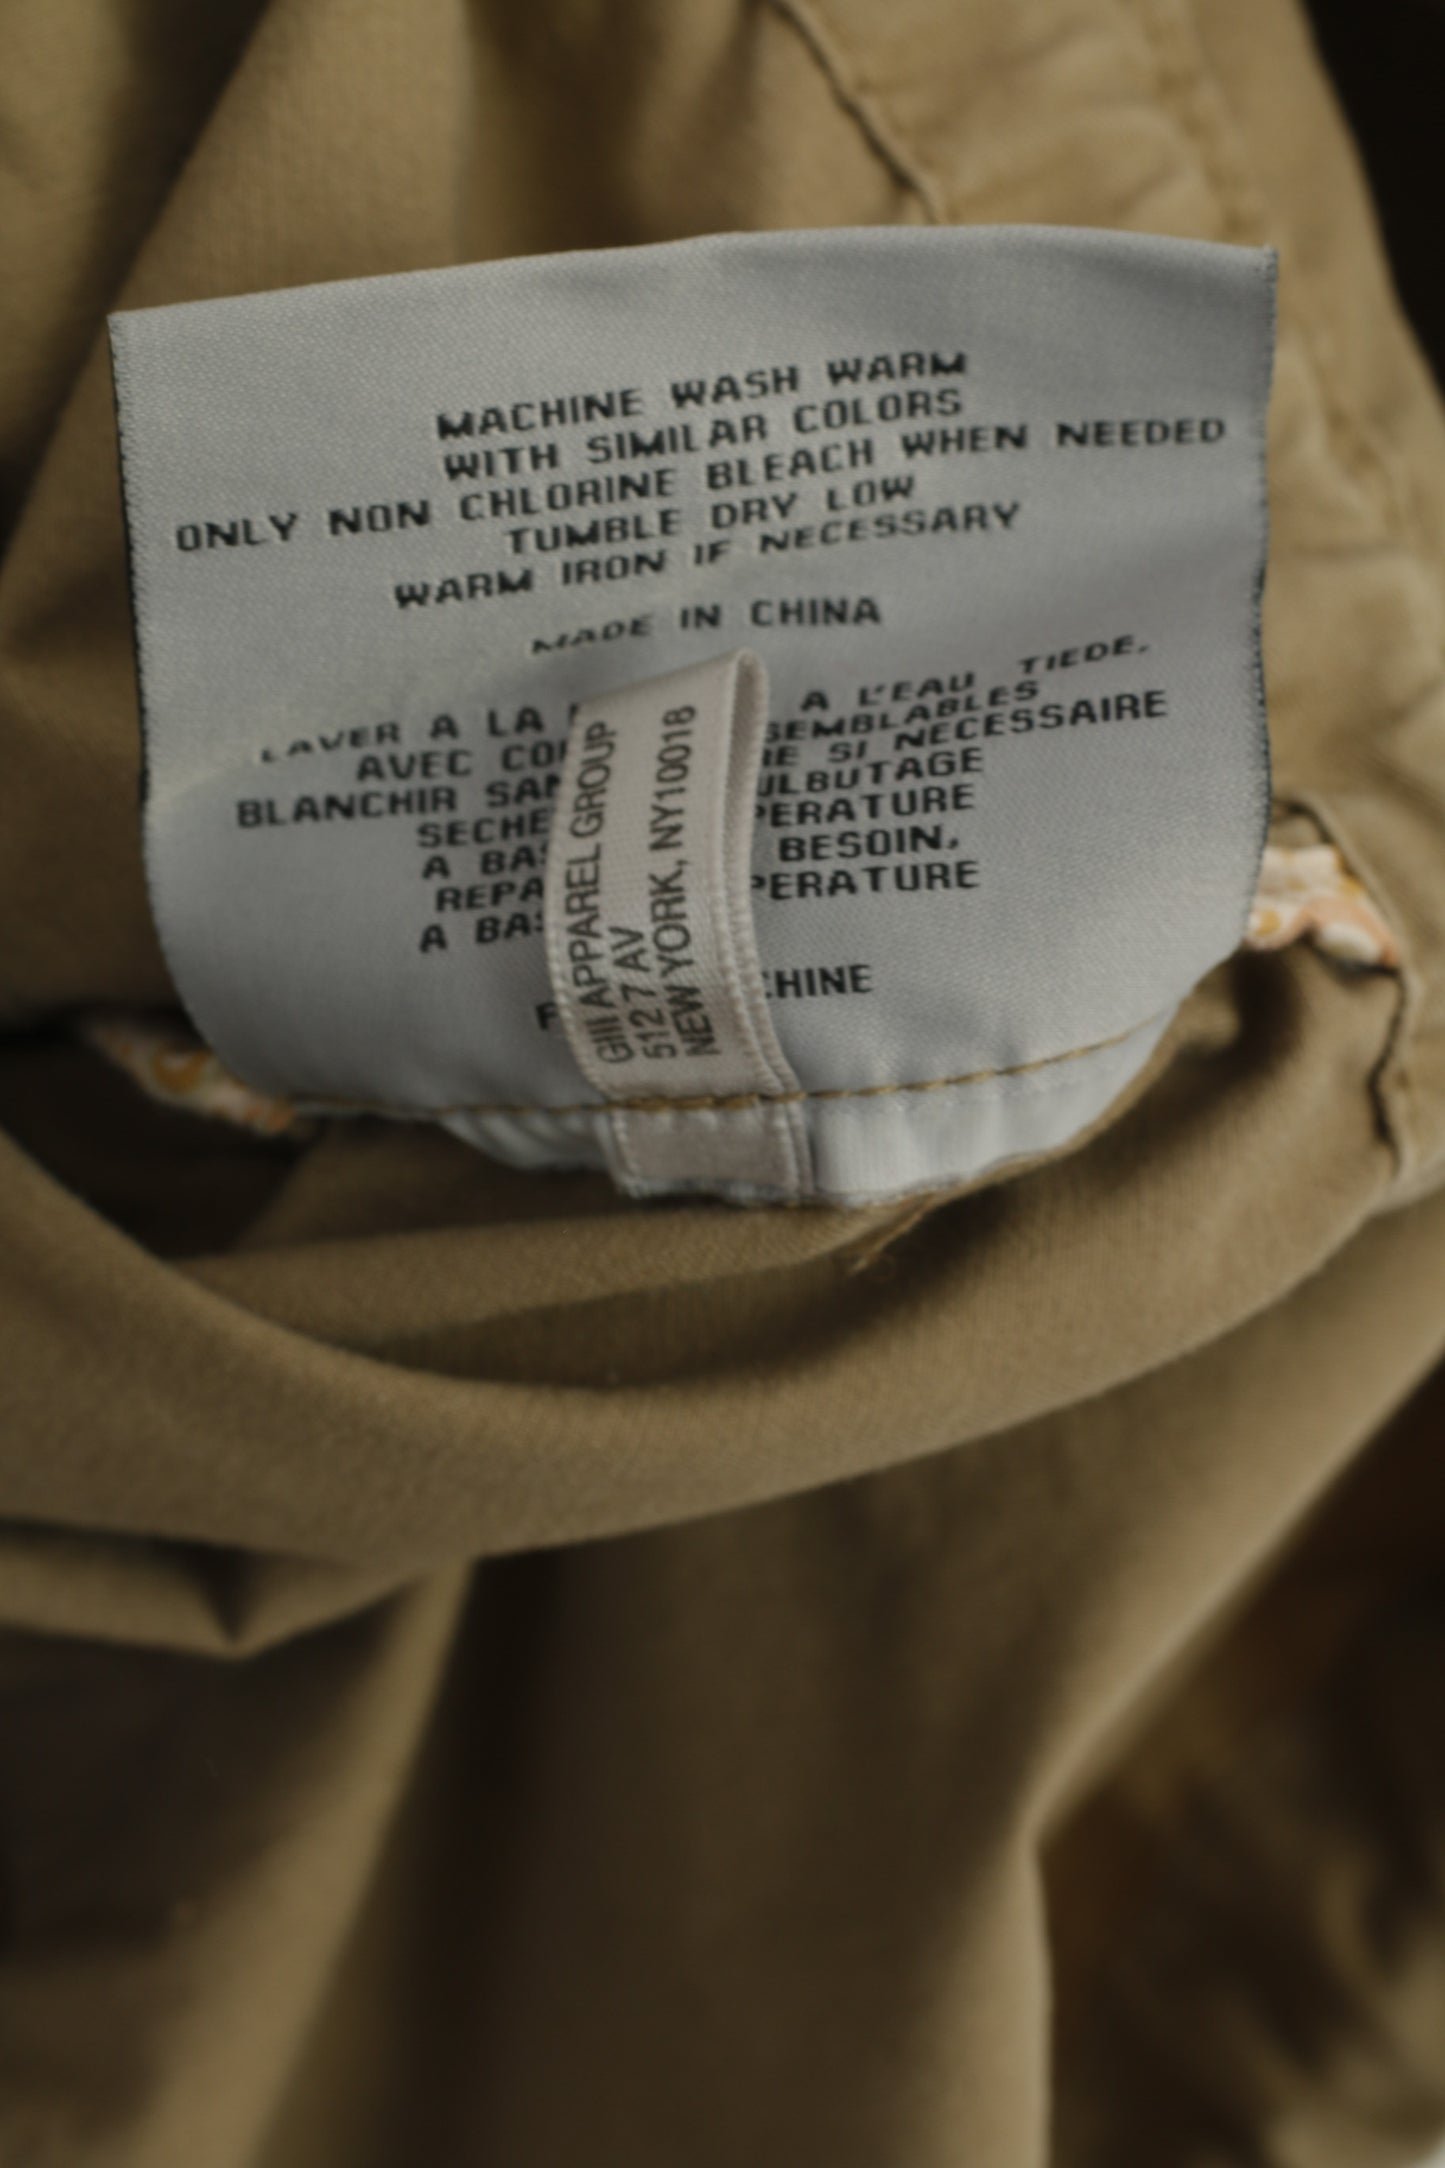 Andrew Marc New York Women XL Jacket Beige Cotton Lightweight Full Zipper Top